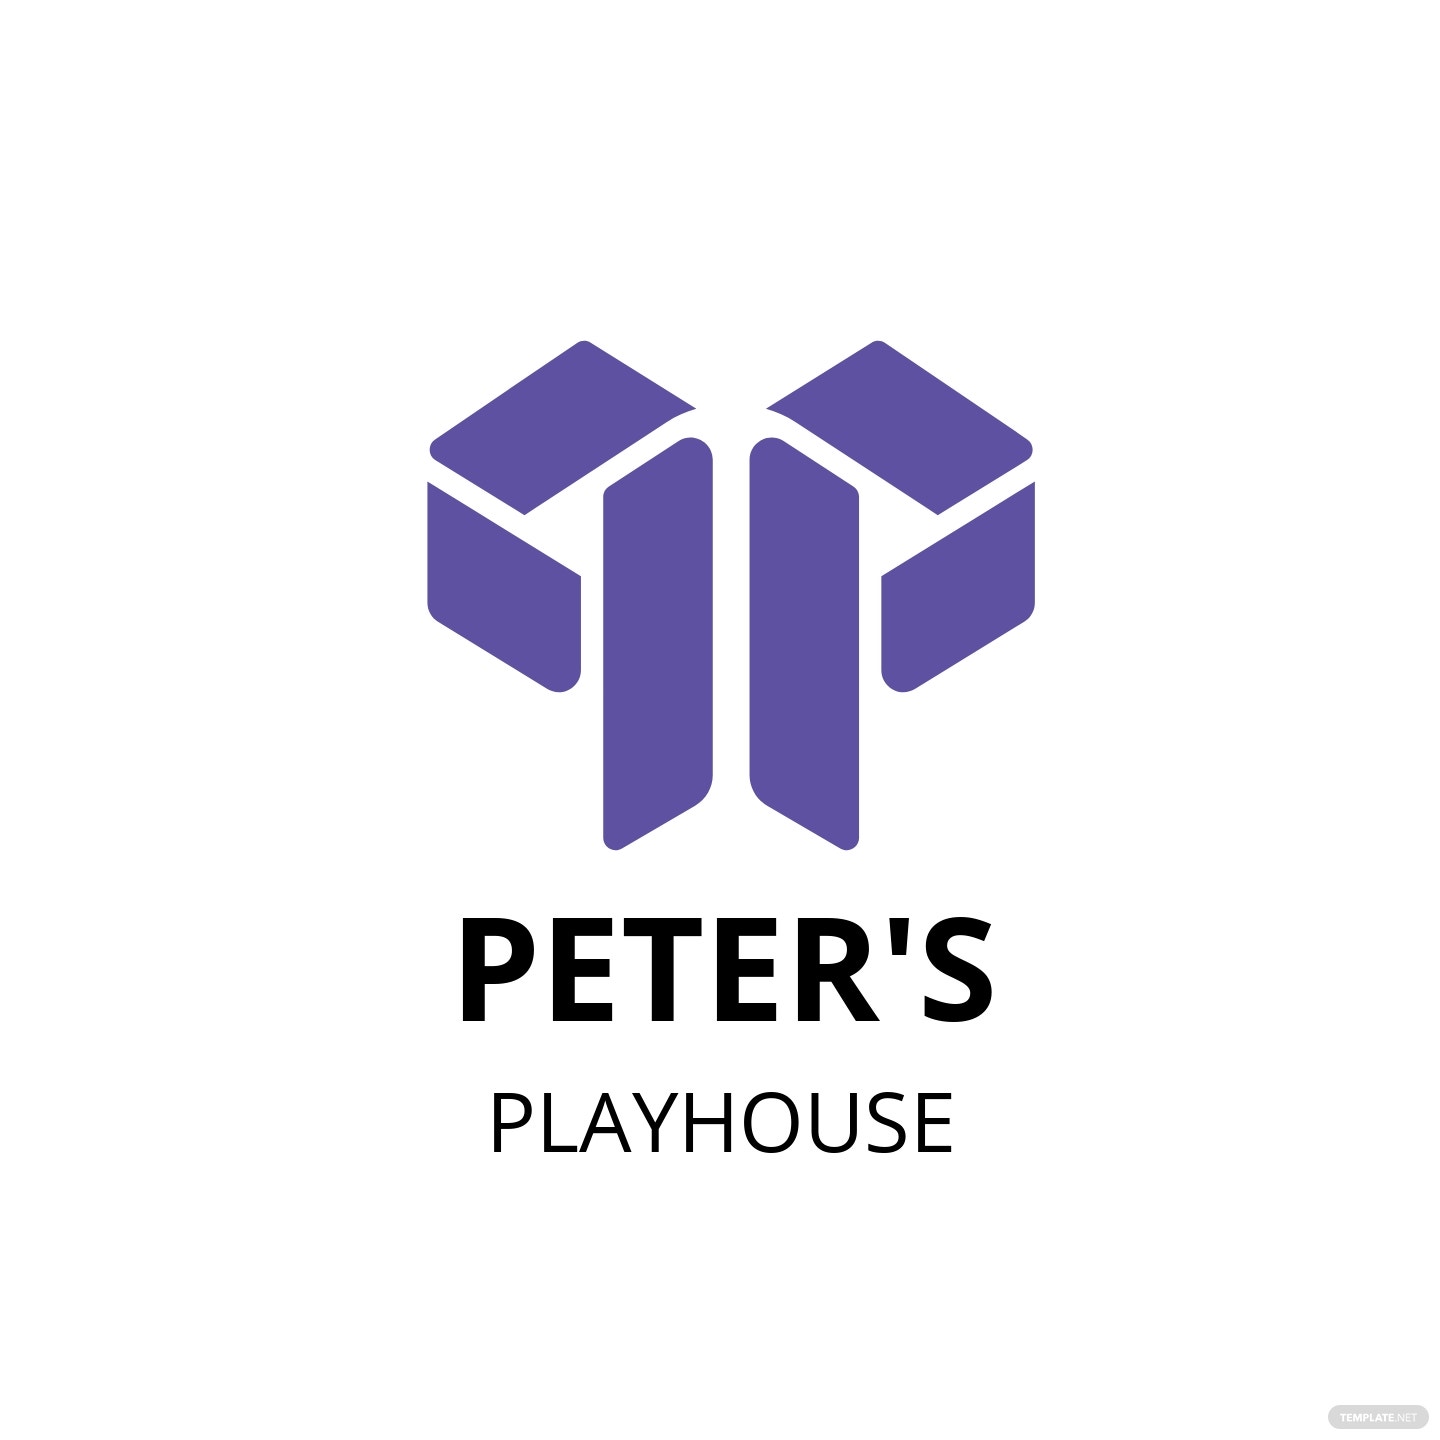 peters playhouse logo template